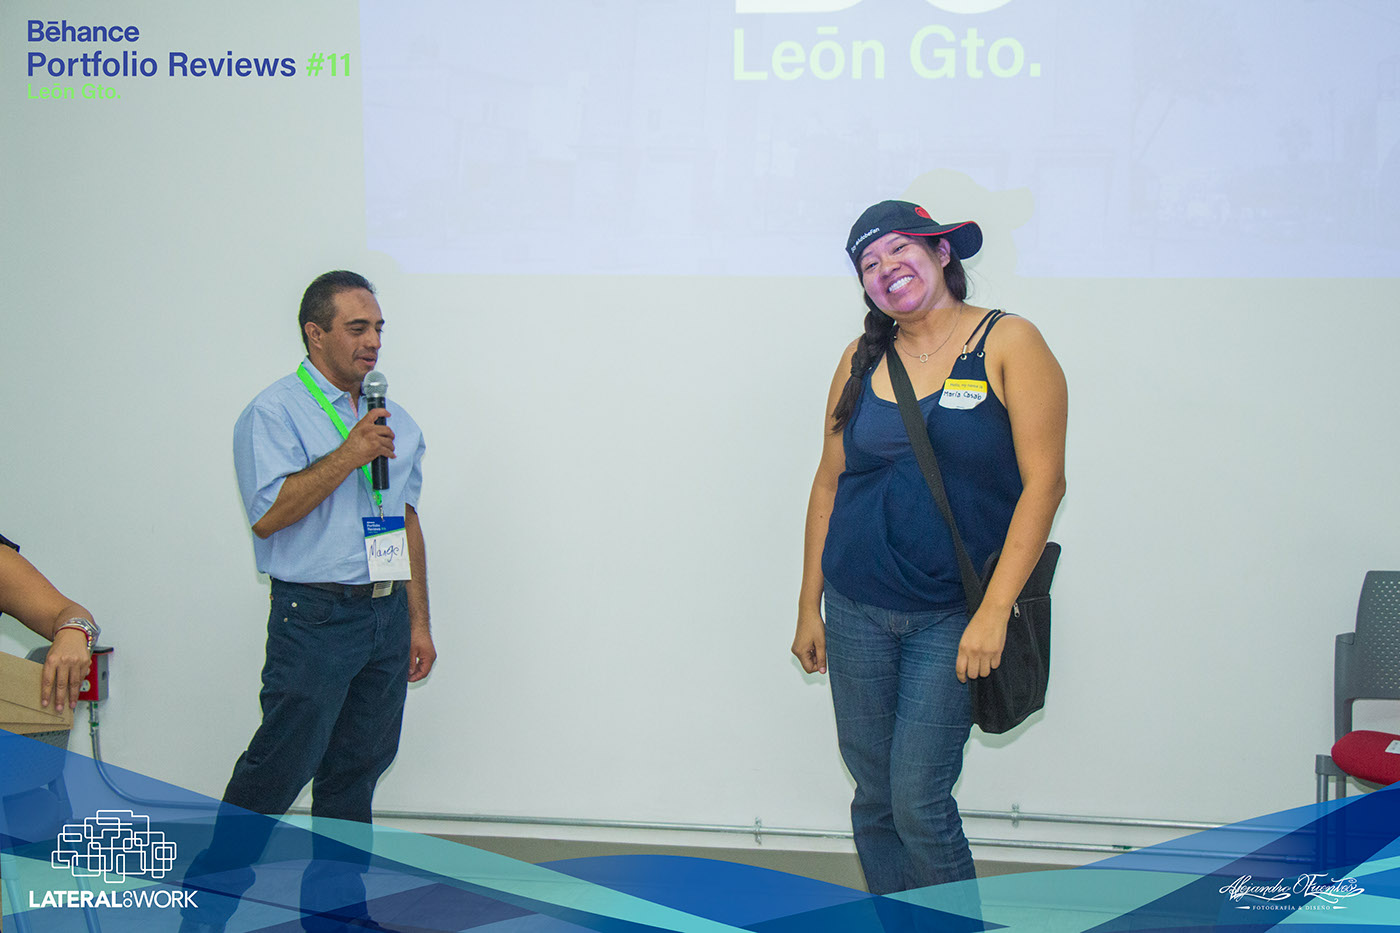 León Gto\ Behance portfolio reviews